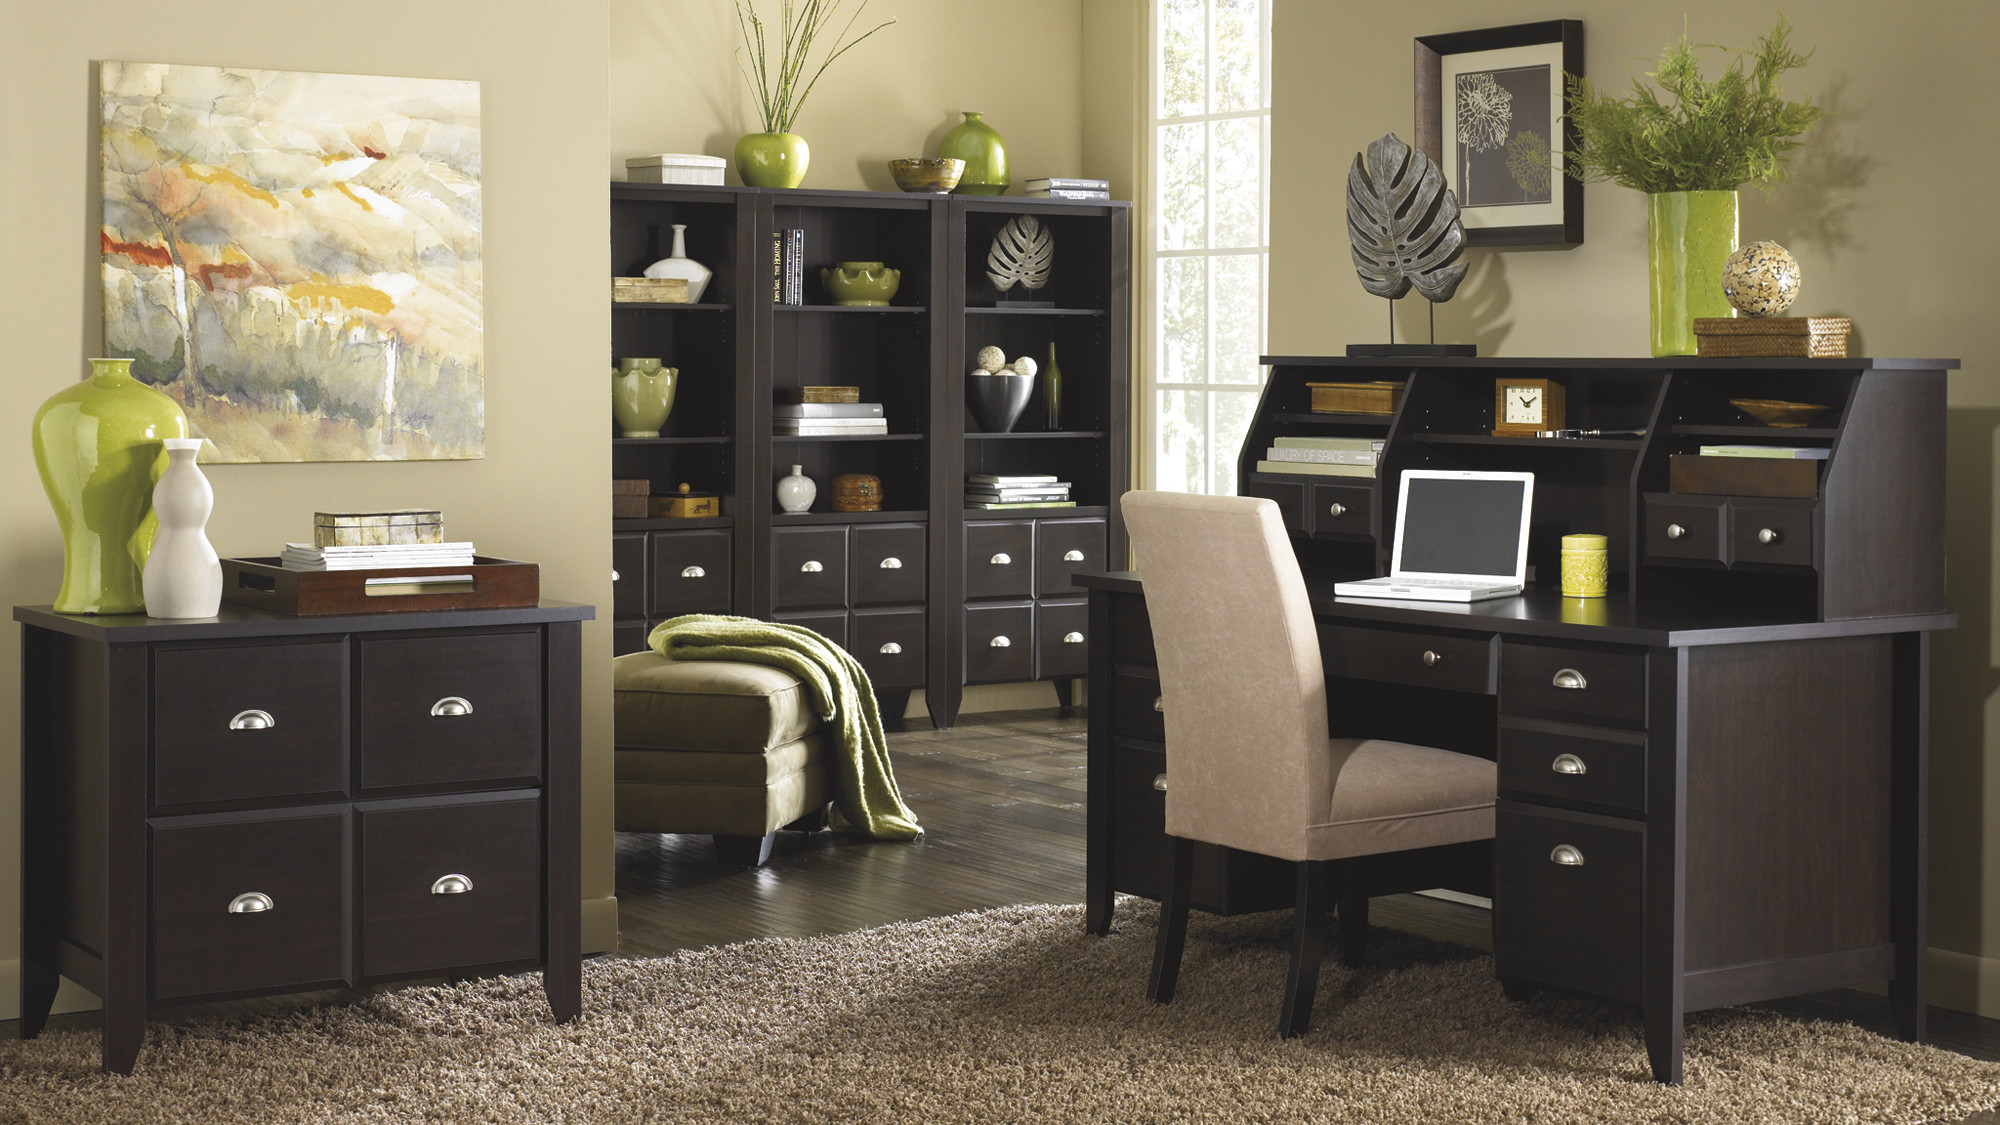 Best ideas about Sauder Office Furniture
. Save or Pin Shop Brands Sauder Furniture Now.